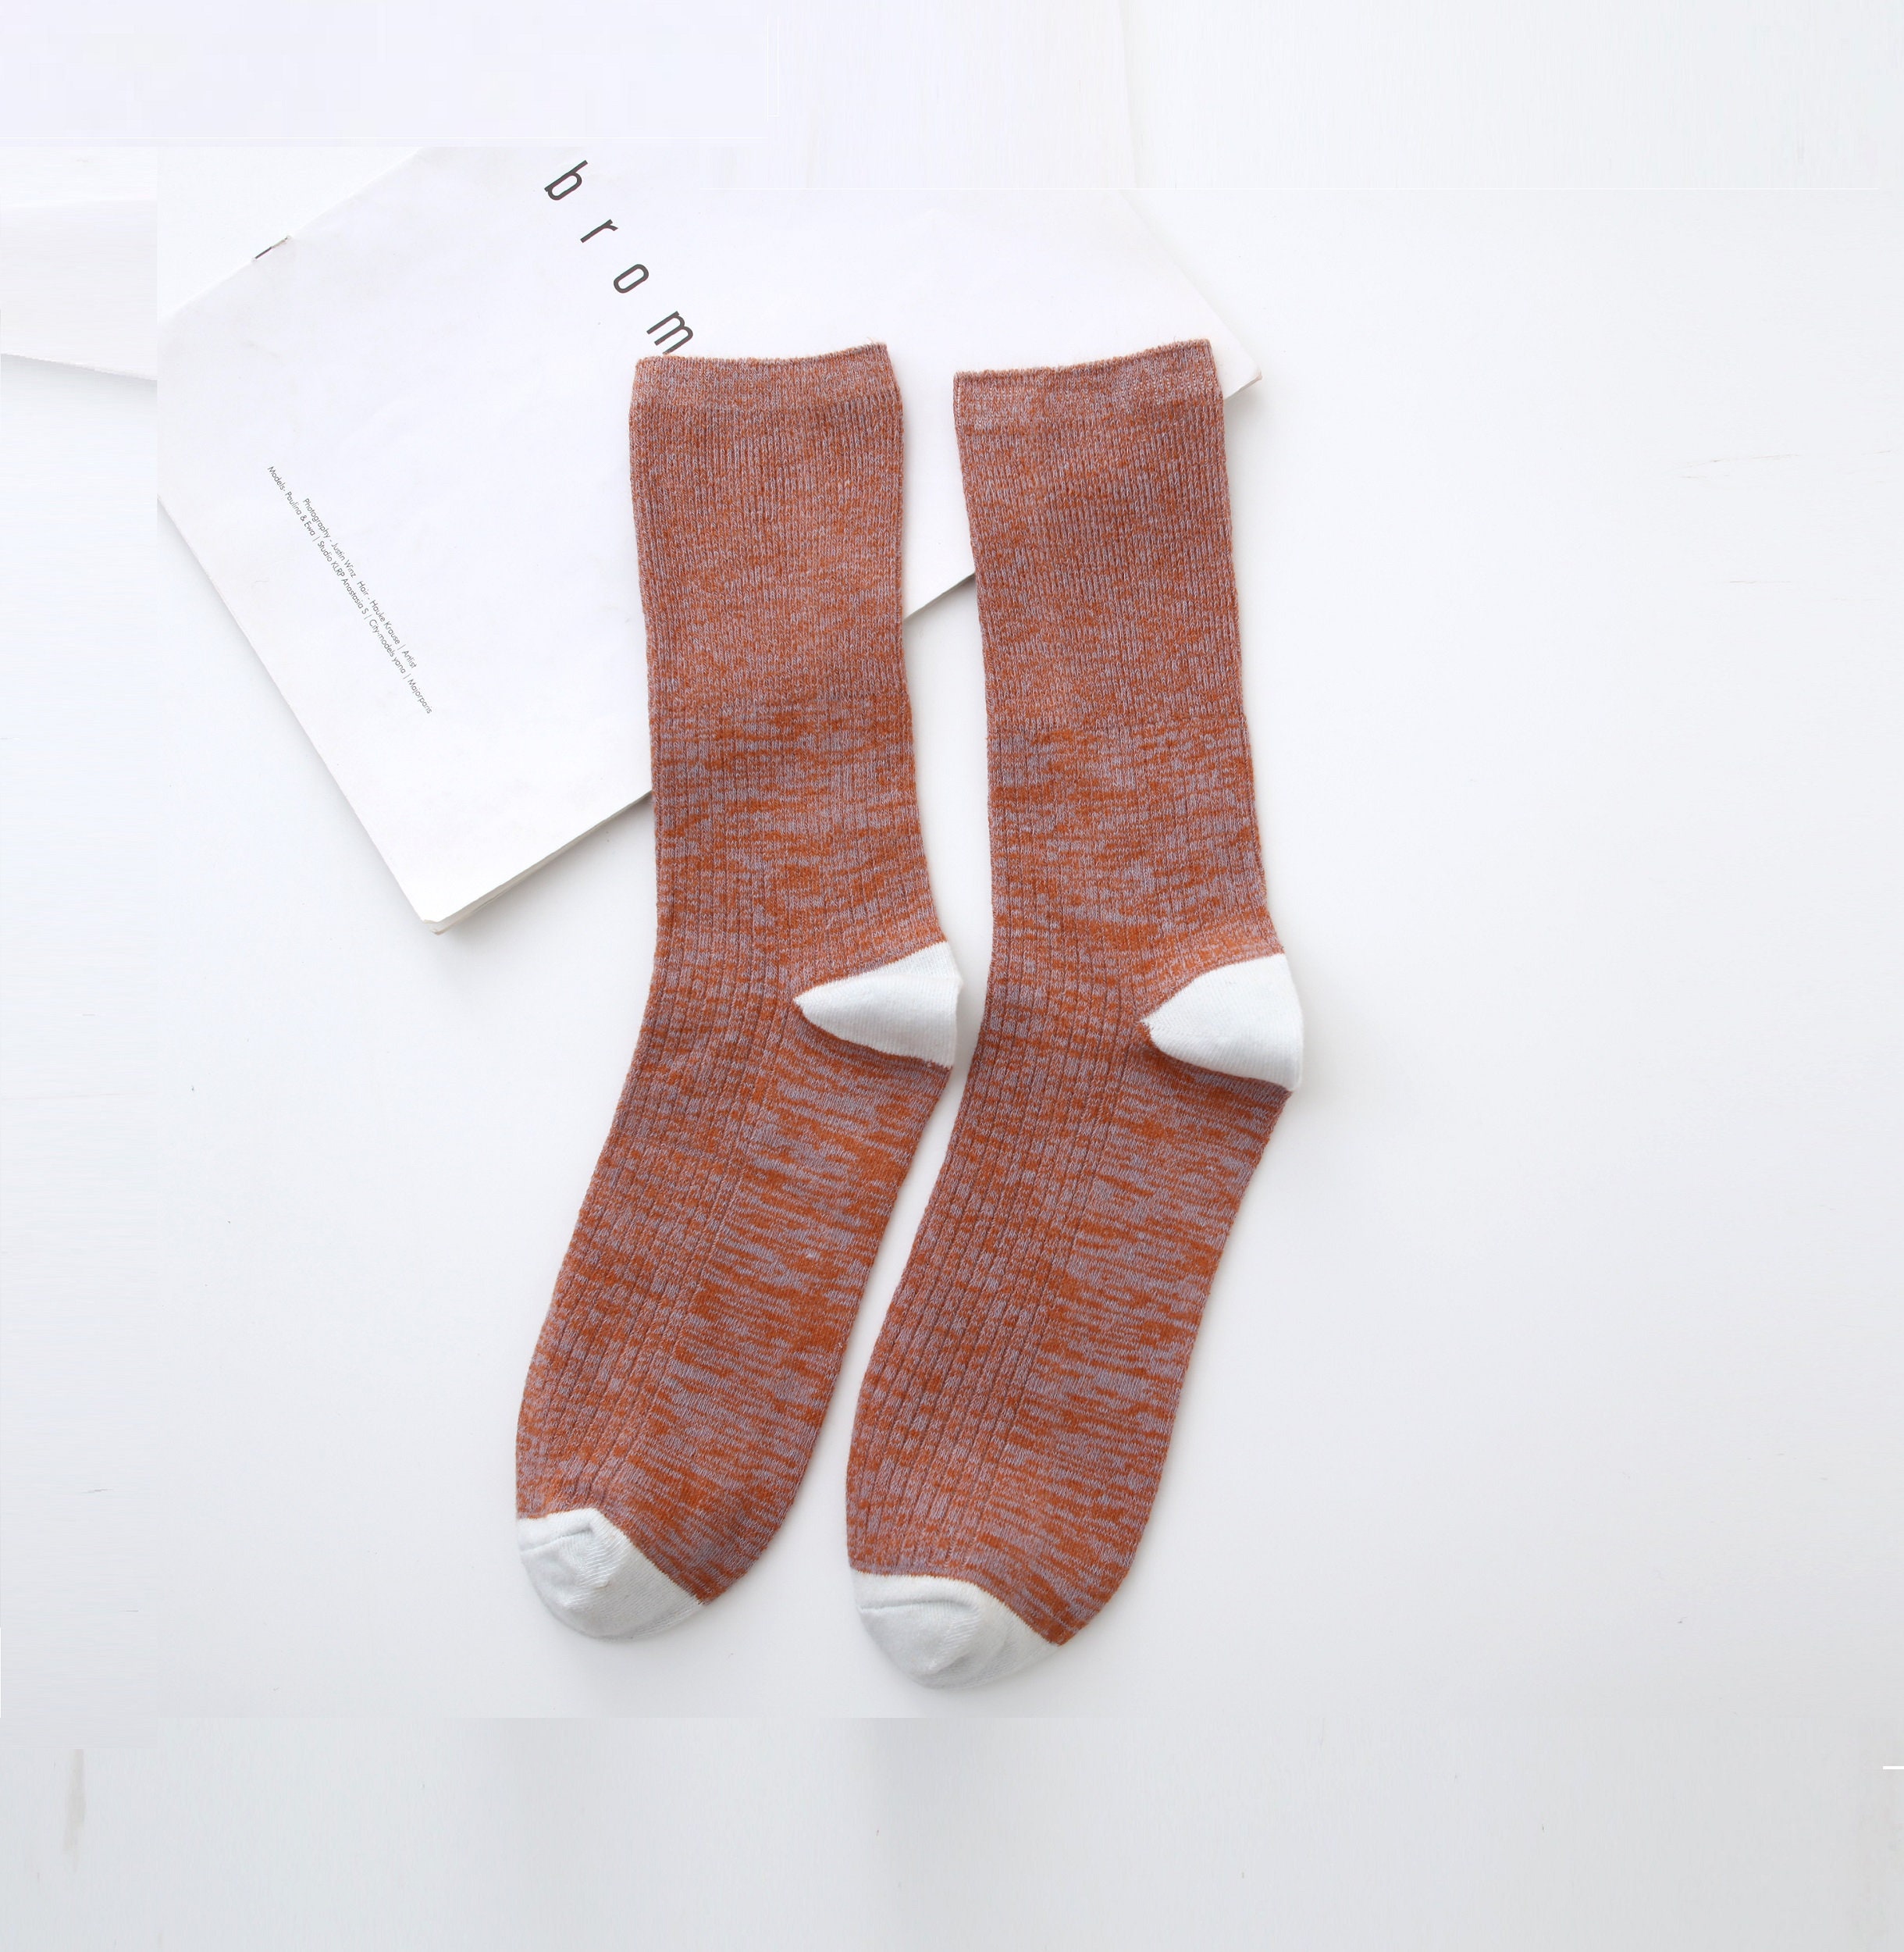 Hemp Socks with Organic Cotton Blend 4 Pairs Crew socks | Etsy